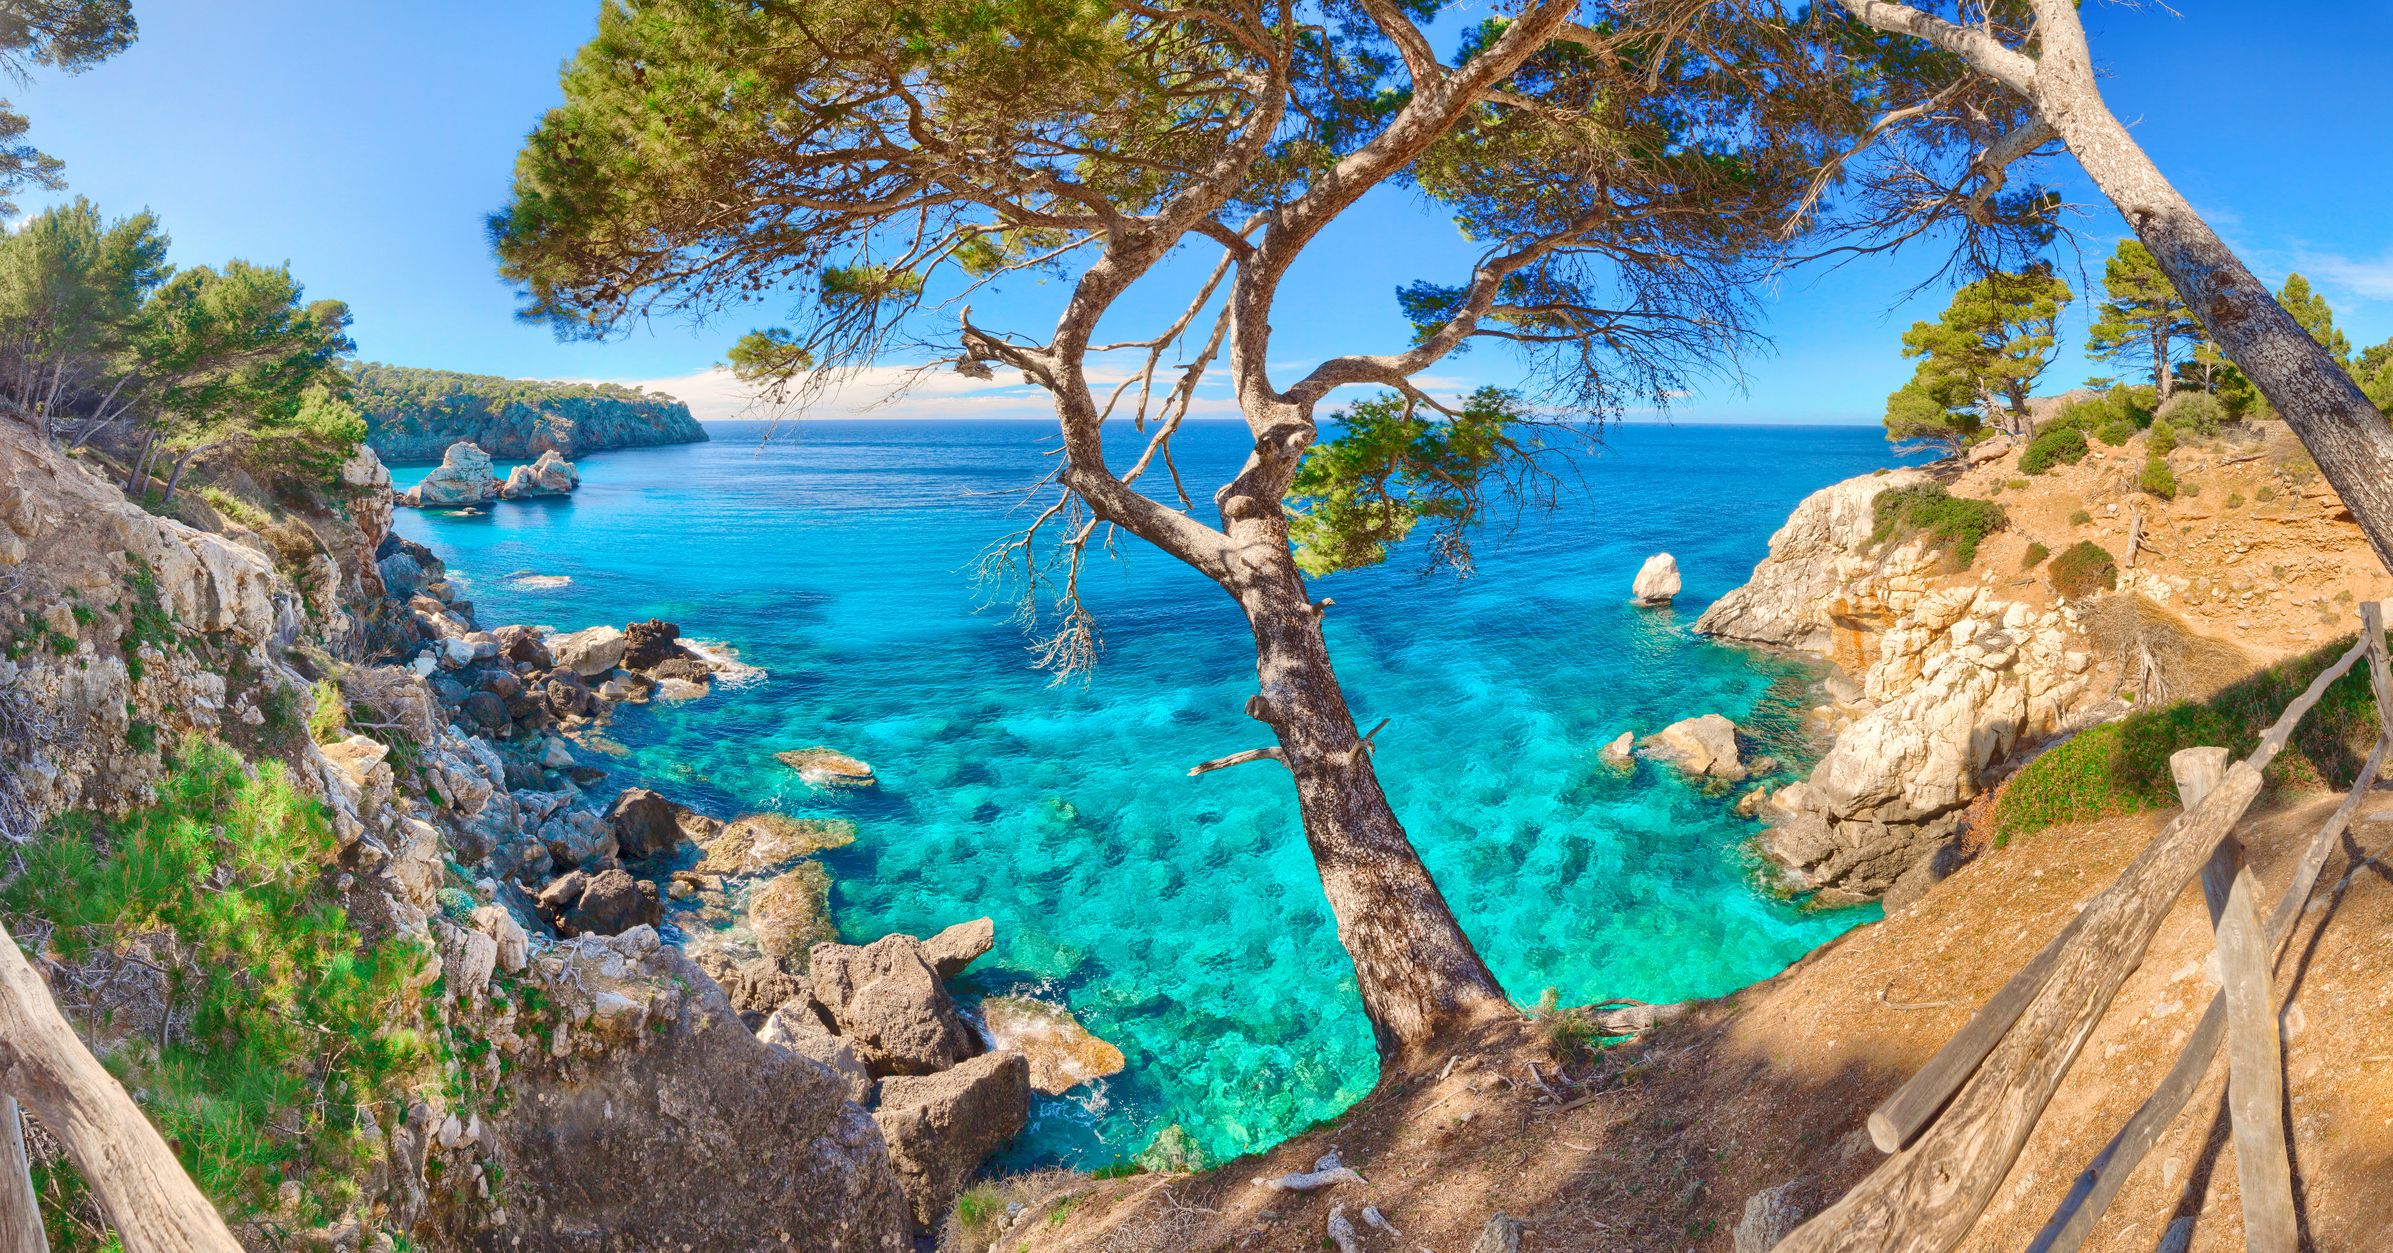 10 Best Hidden Beaches in the World - Secret Vacation Destinations